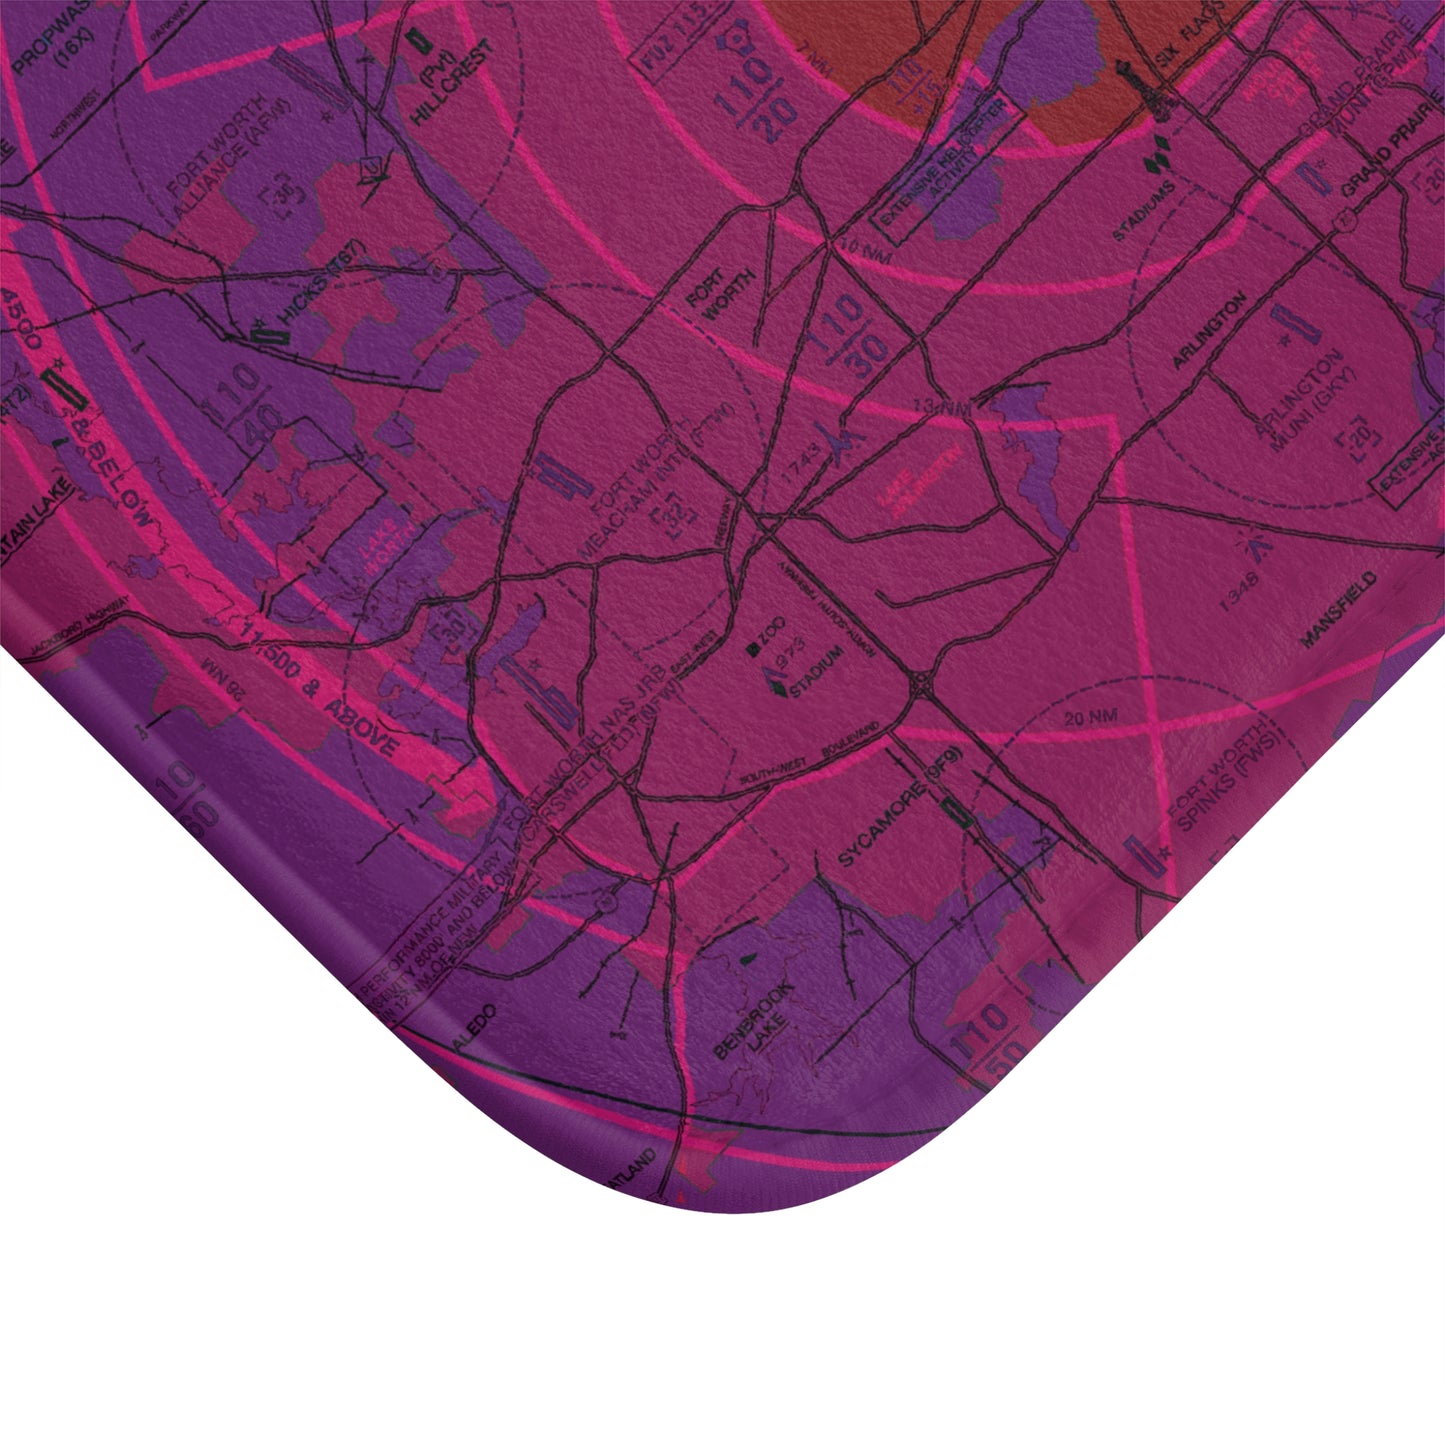 Dallas - Ft. Worth Flyway Chart bath mat (purple)